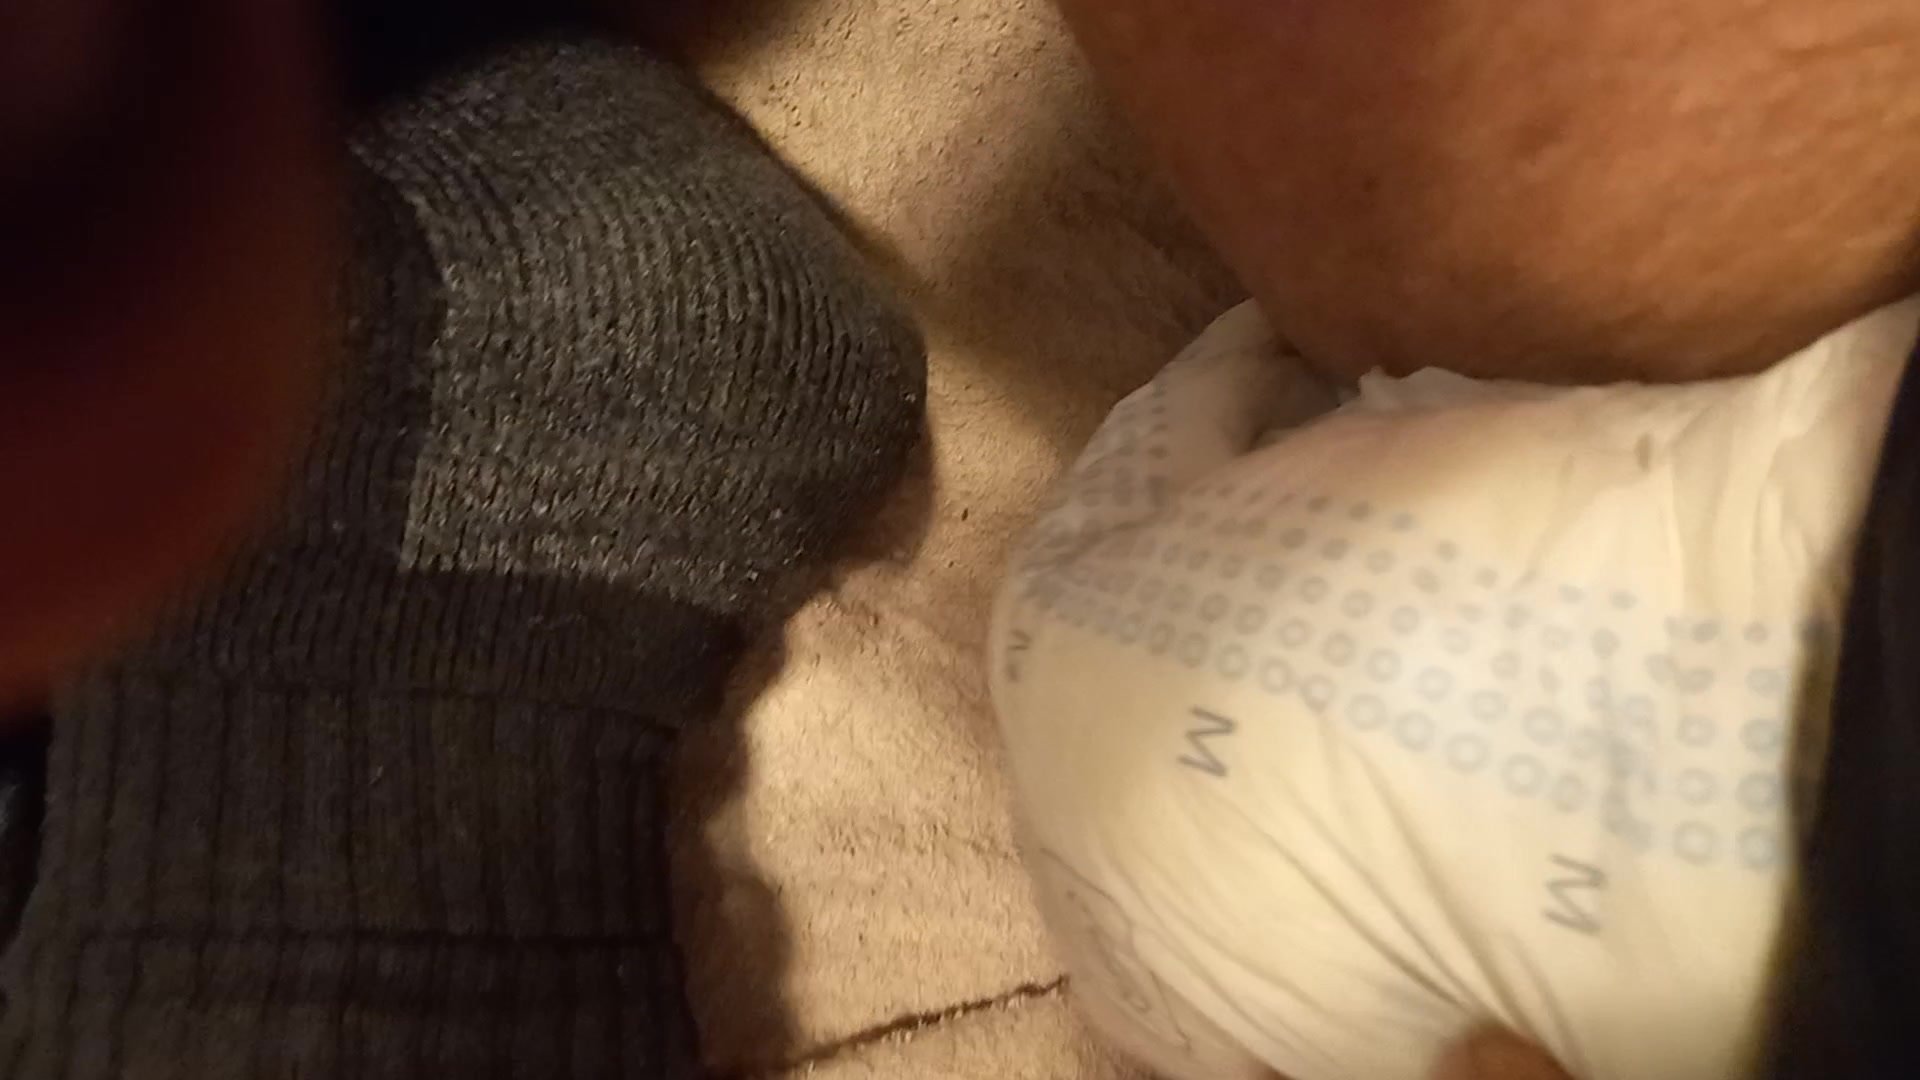 Messy diaper - video 17